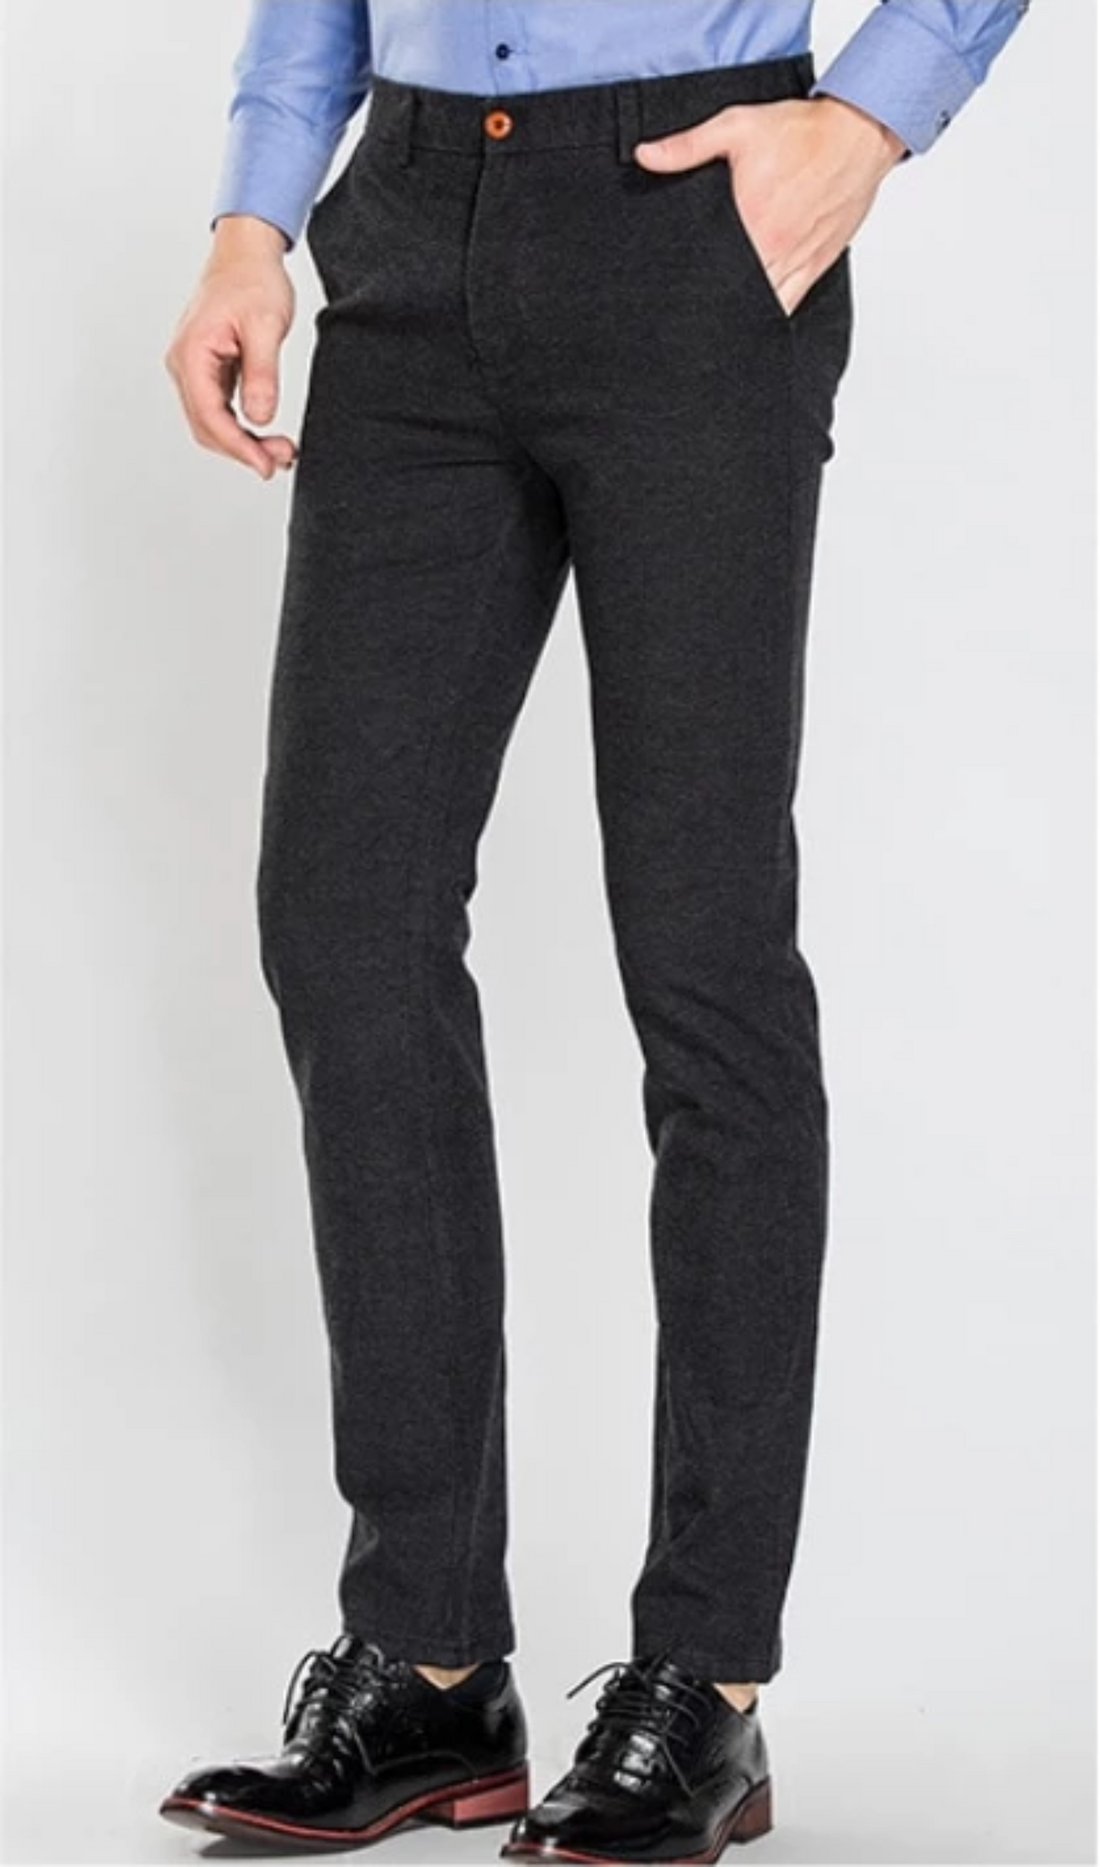 Men's Autumn/Winter Casual Cotton Slim Elastic Pants